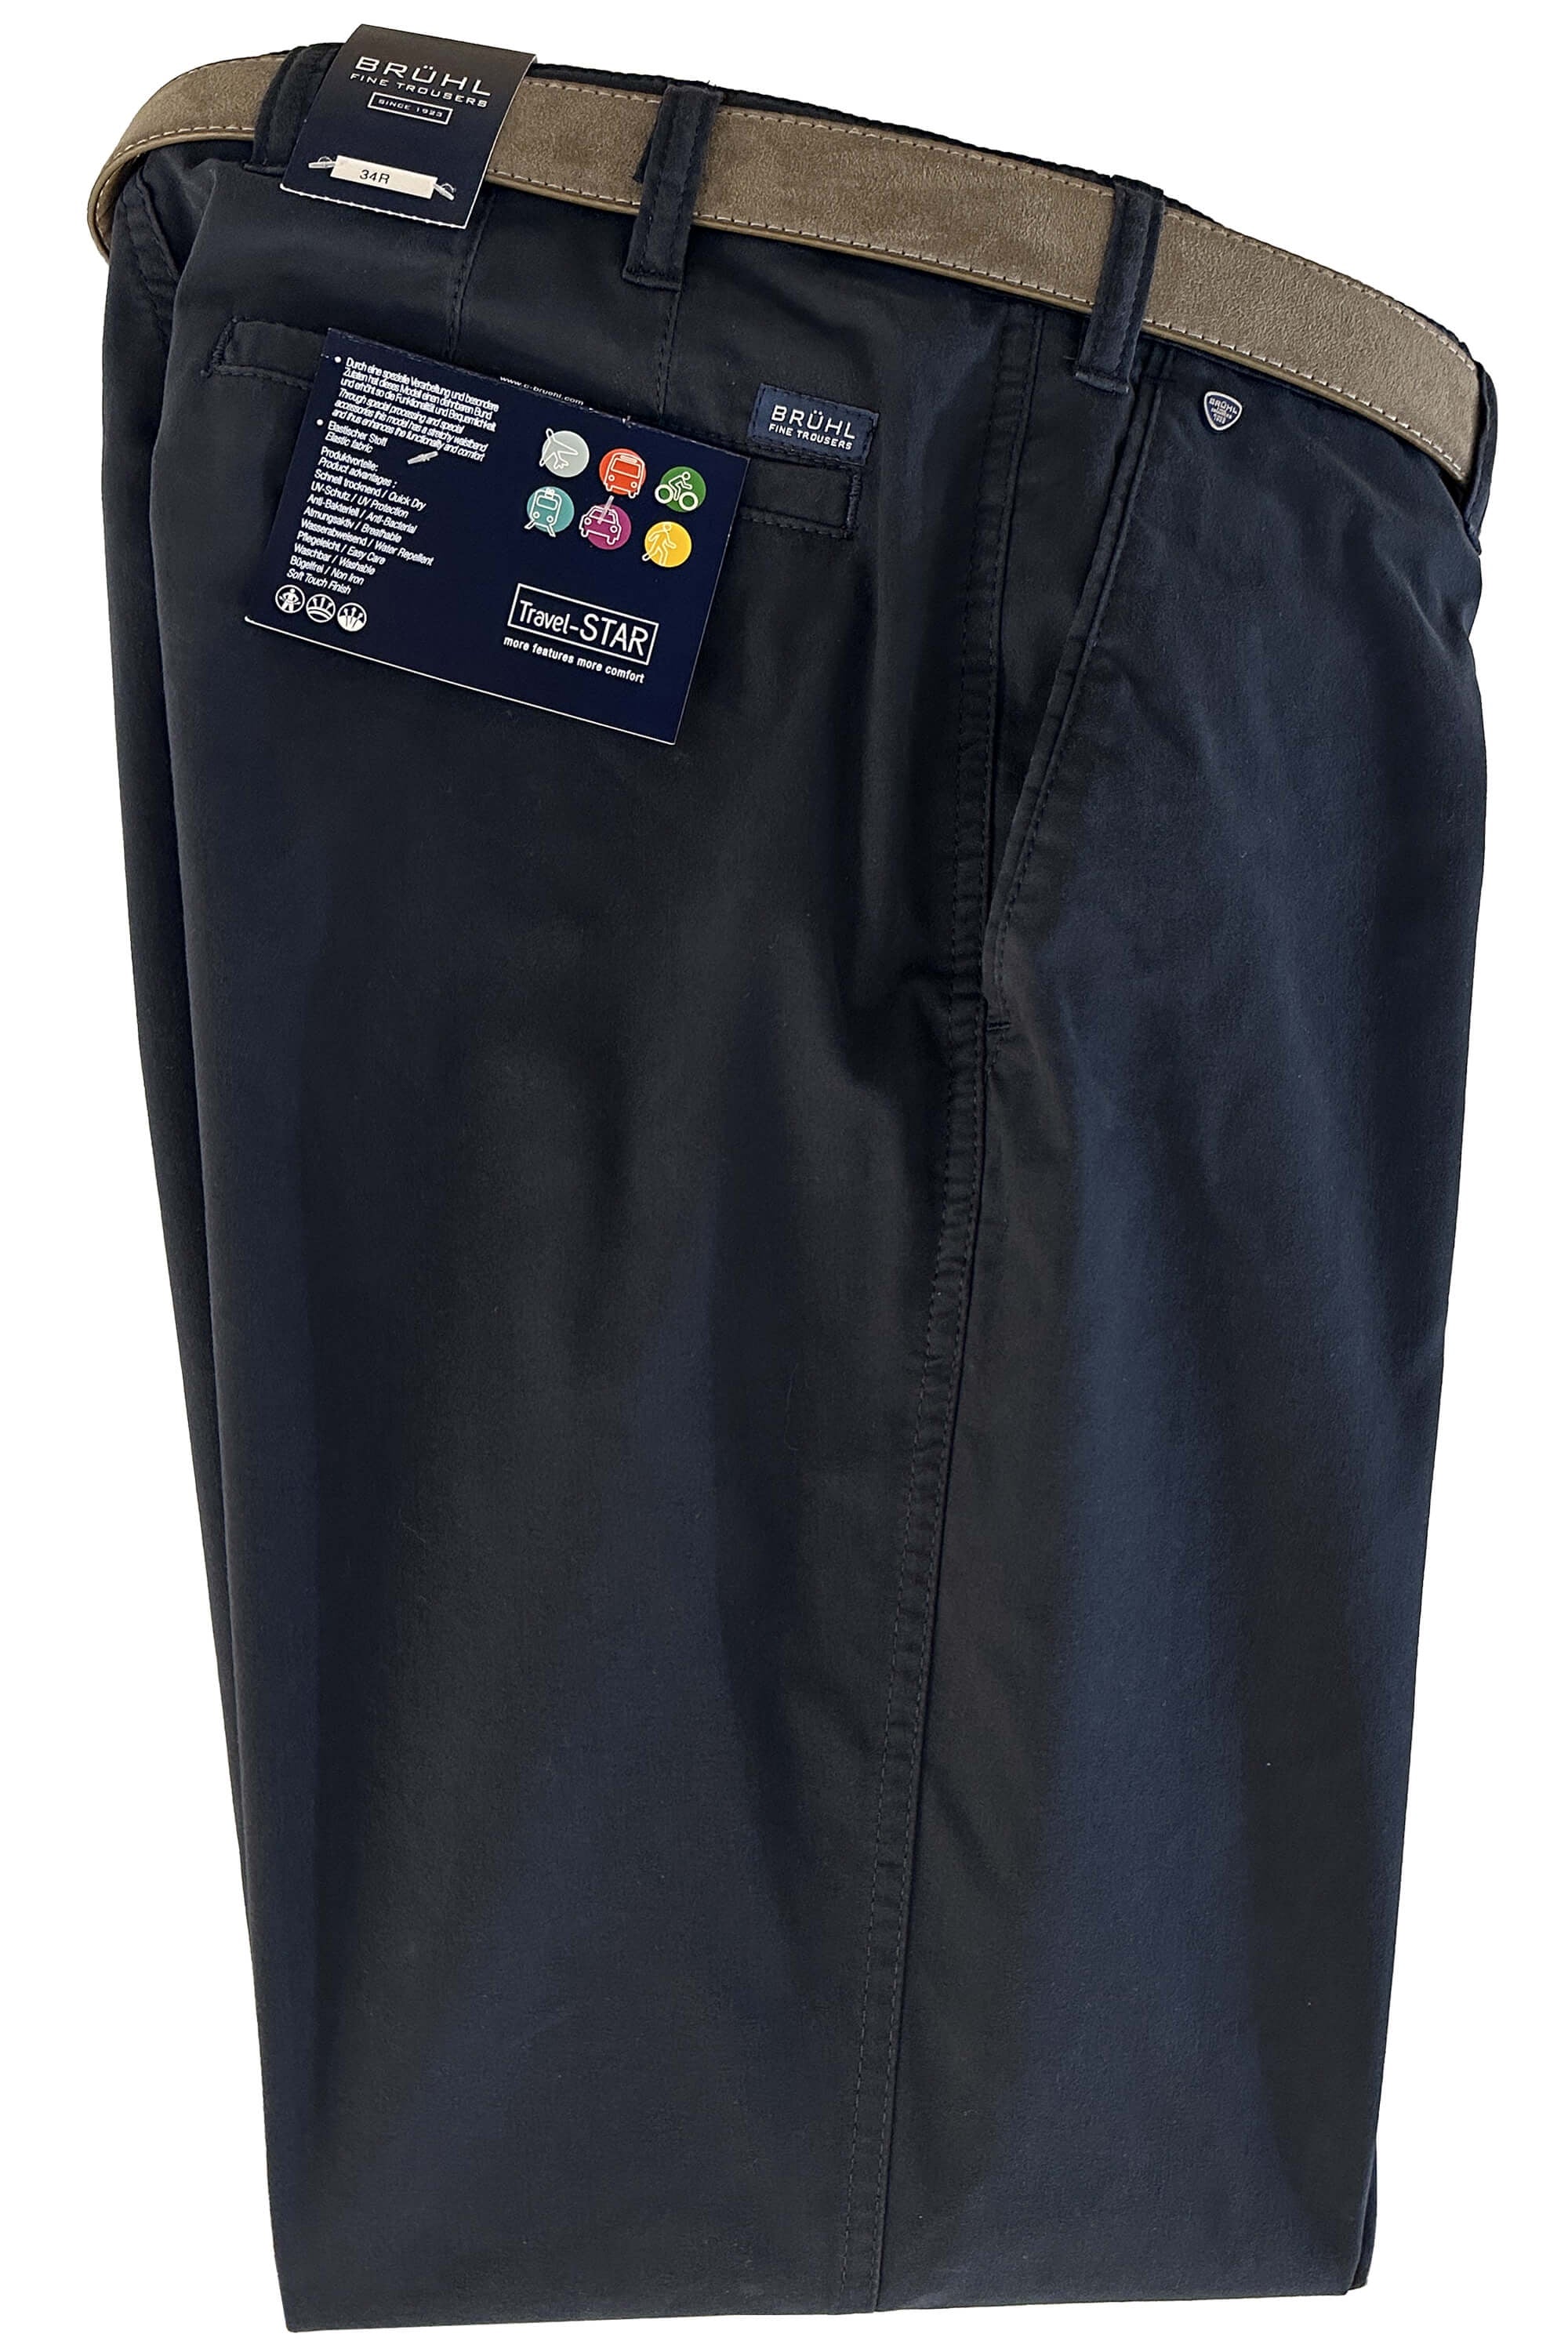 Bruhl Montana Navy Trousers